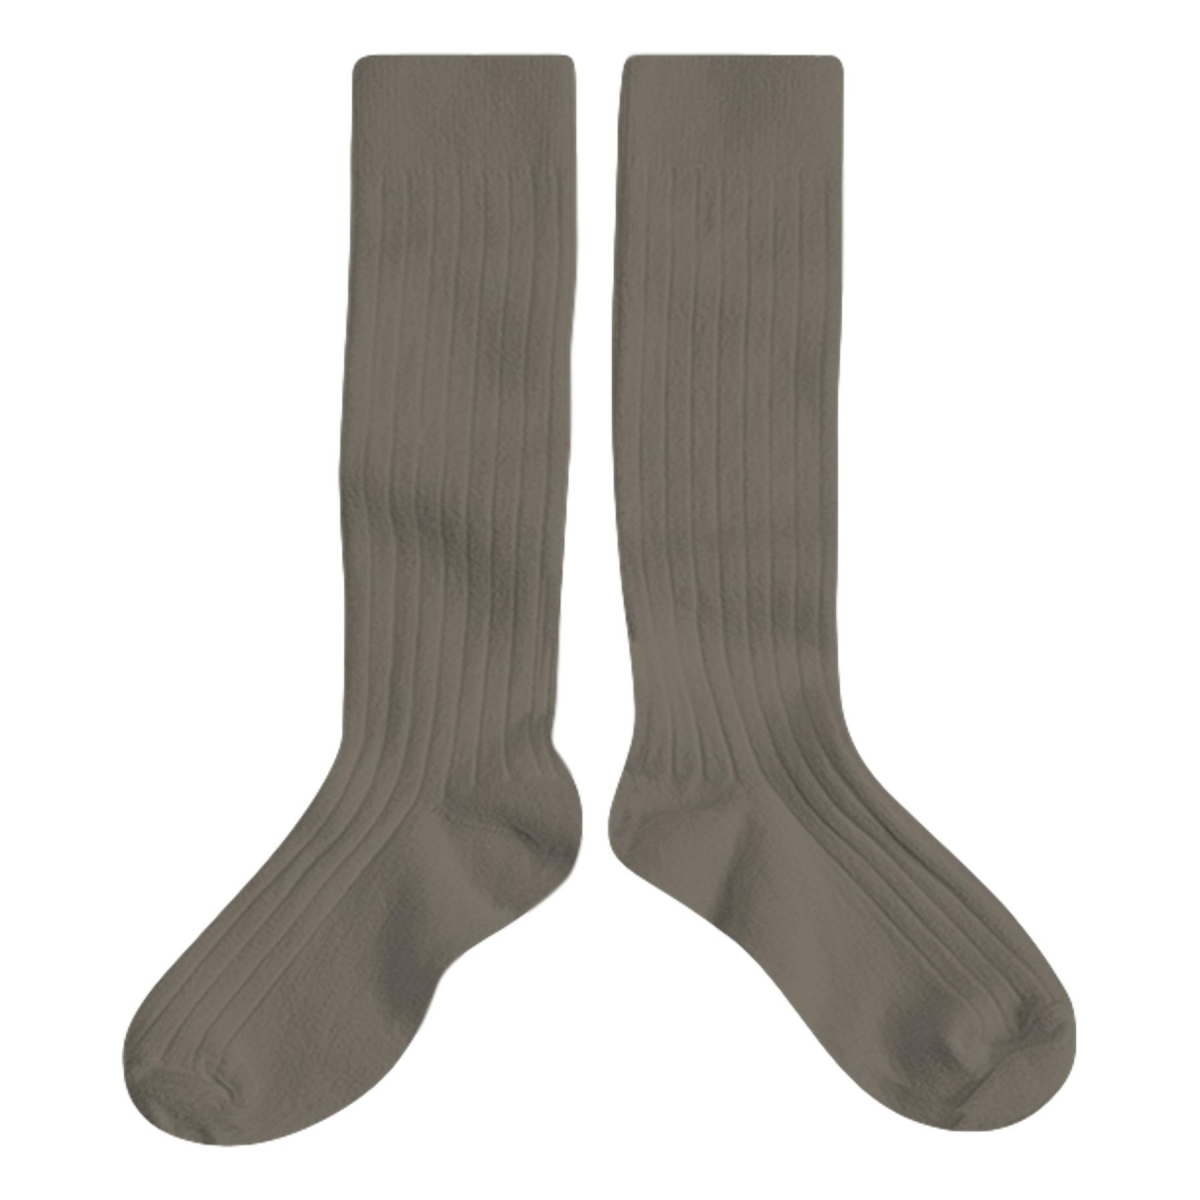 Collégien Knee high socks La Haute brun de terre 2950 769 La